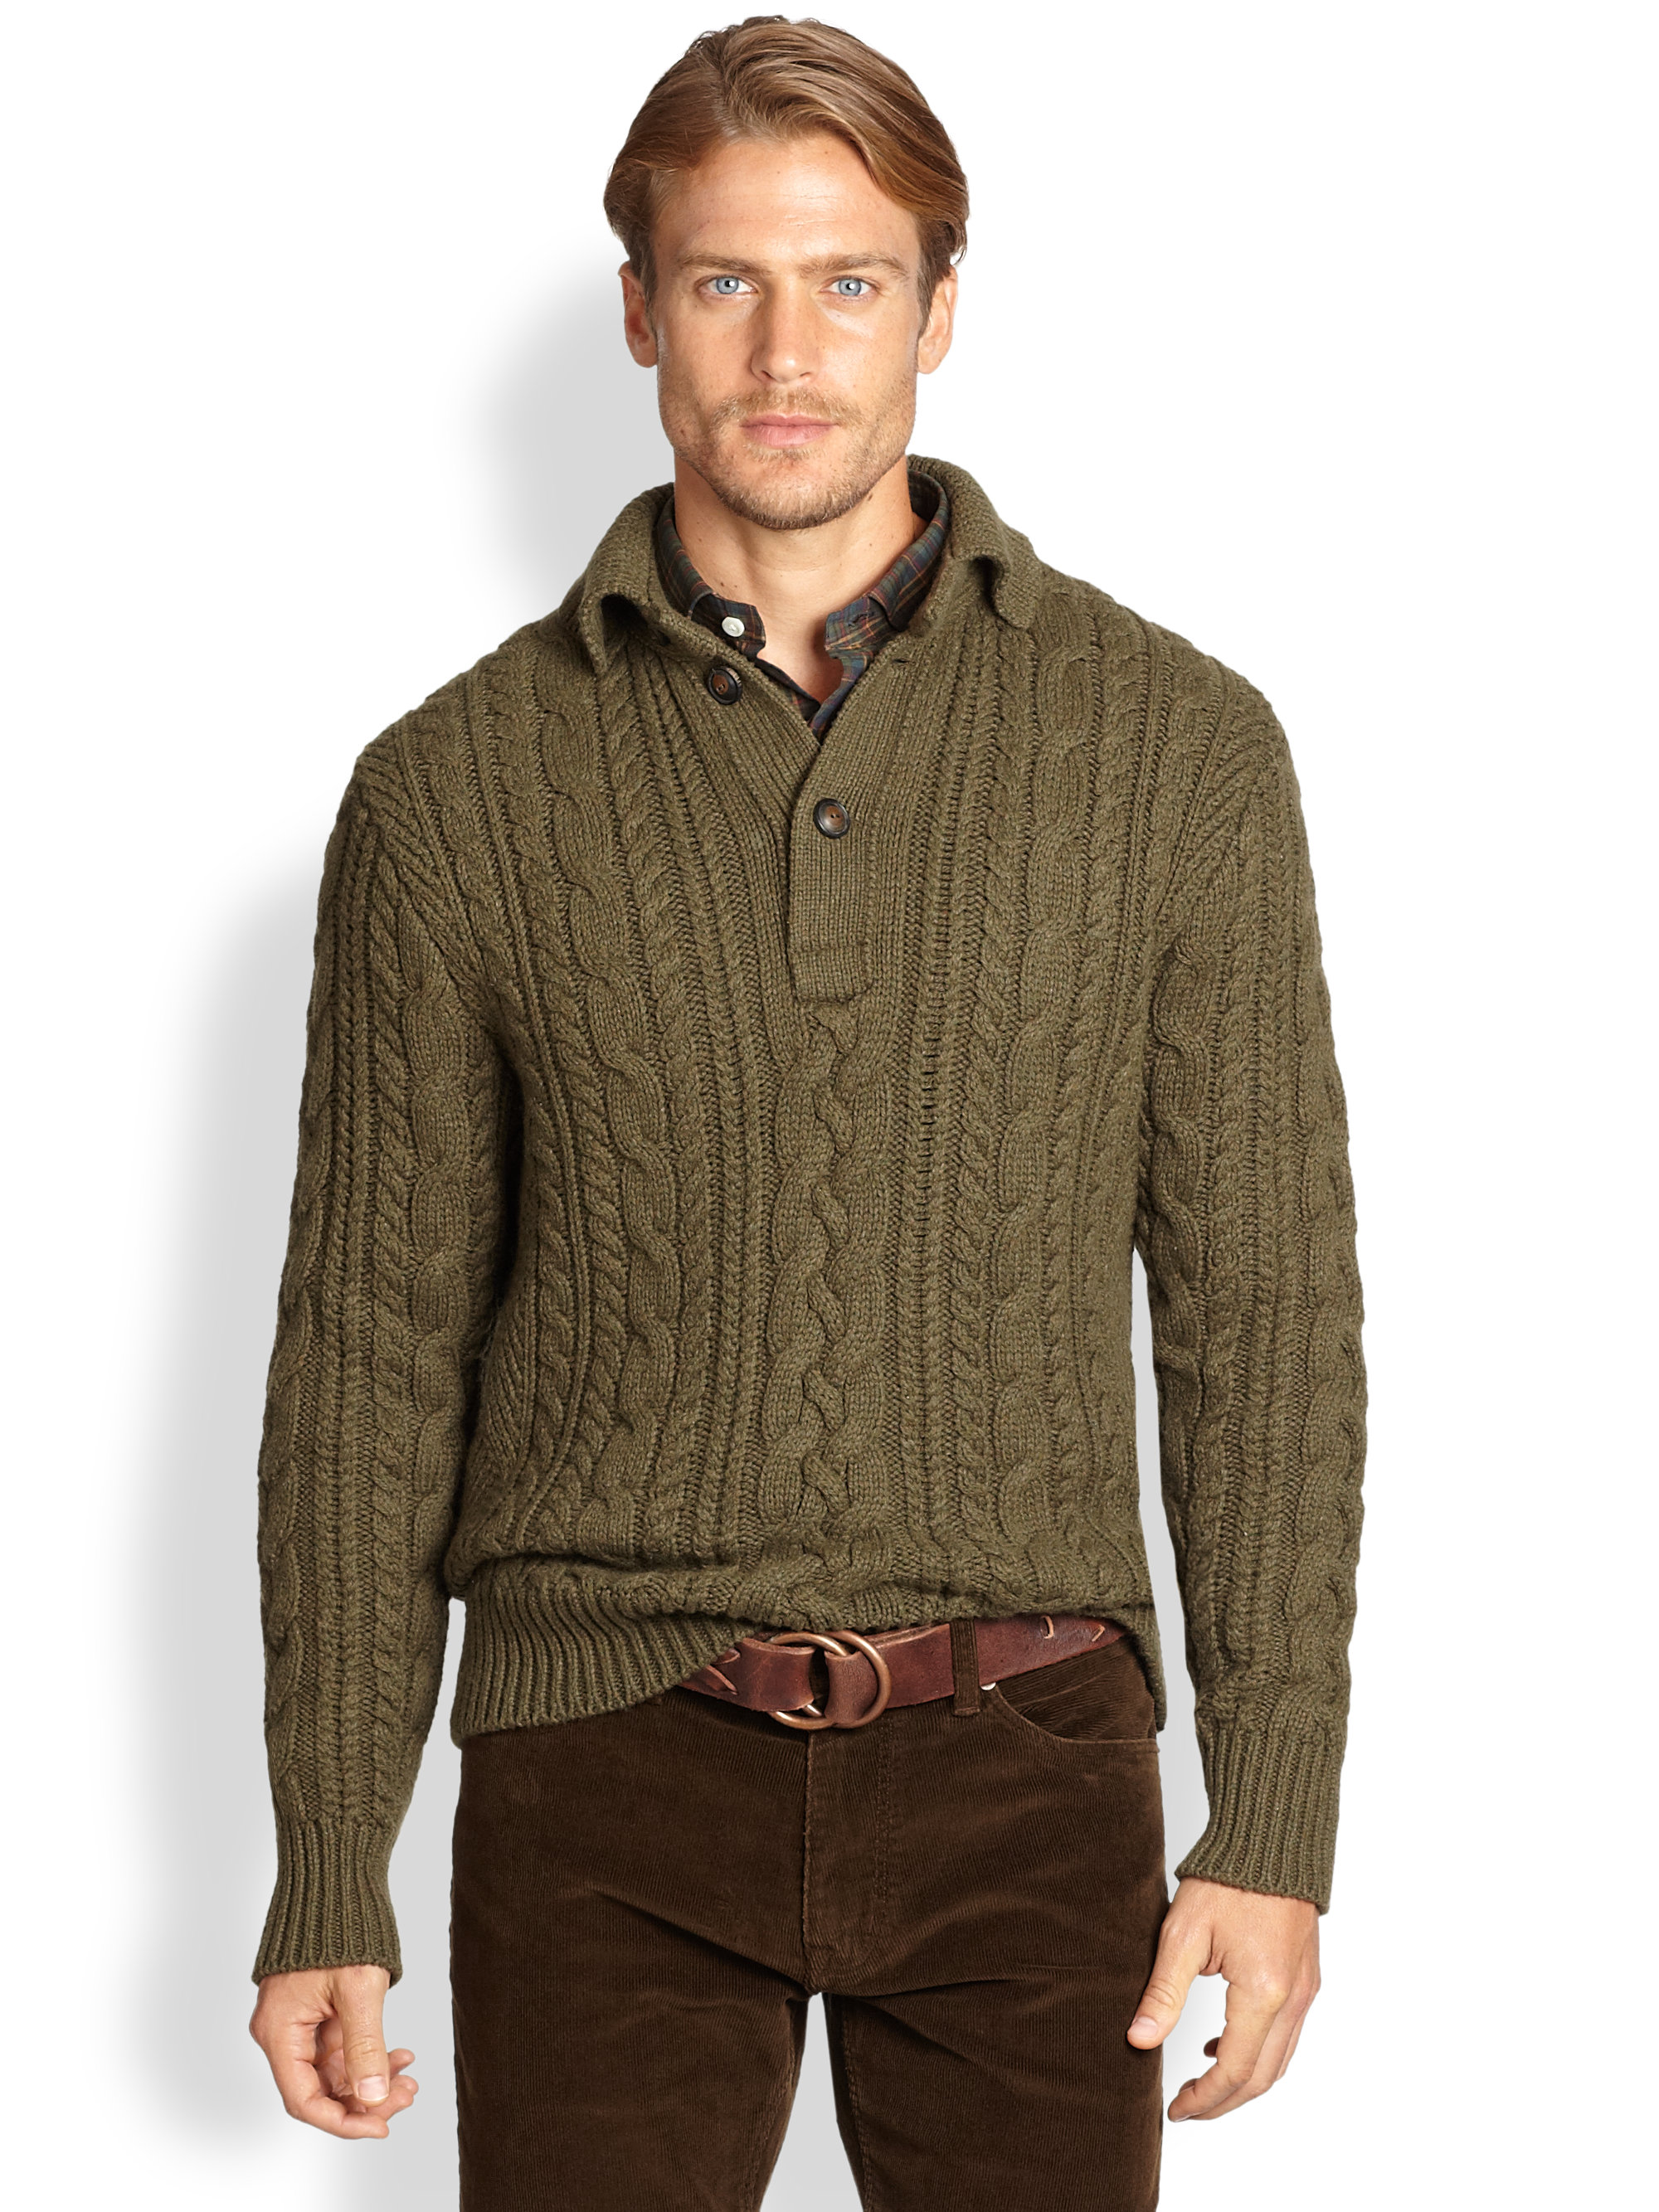 Polo Ralph Lauren Aran knit Sweater in Olive (Green) for Men - Lyst